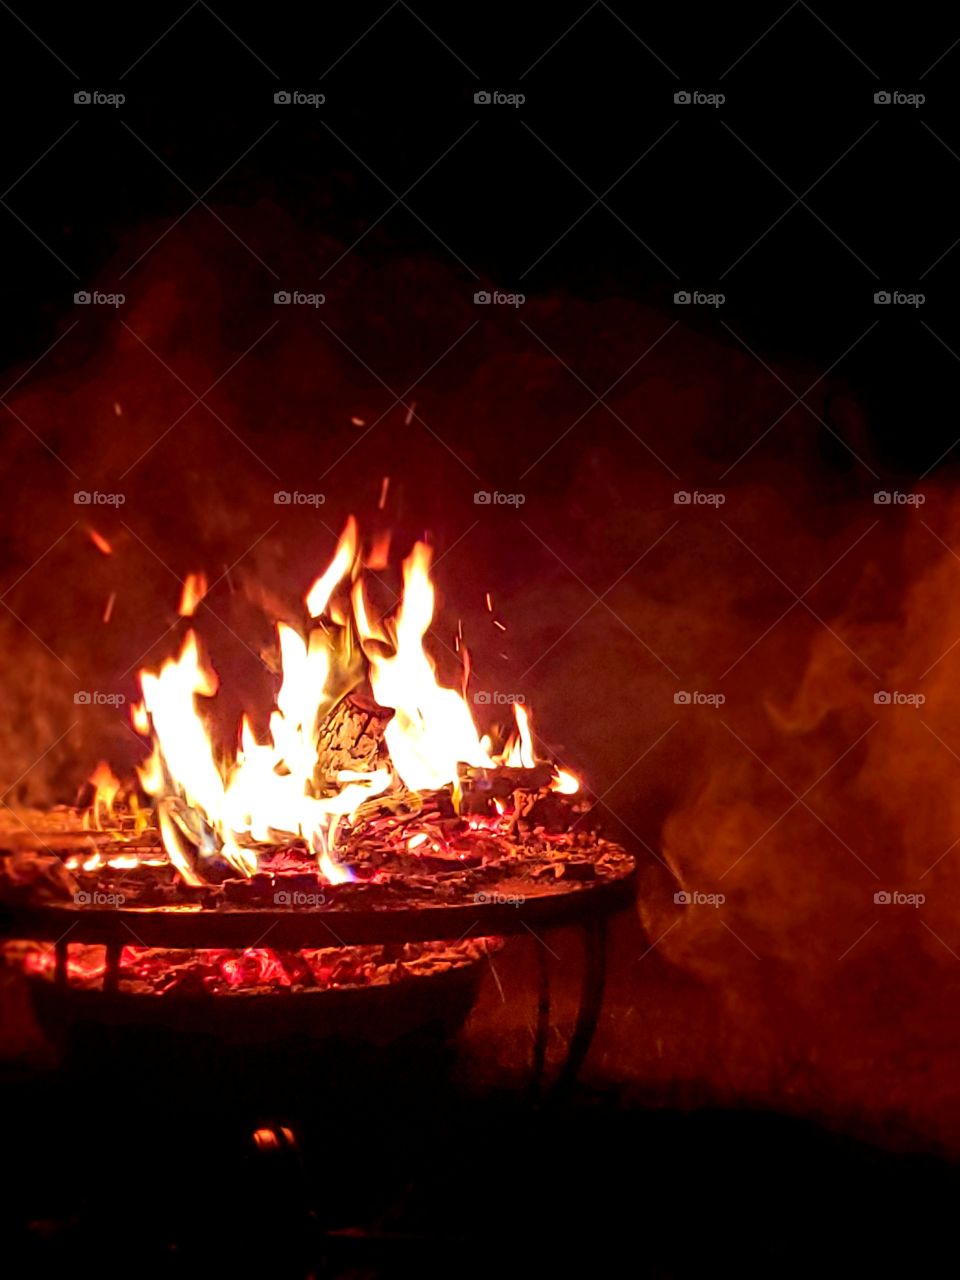 red smoke around a campfire at night